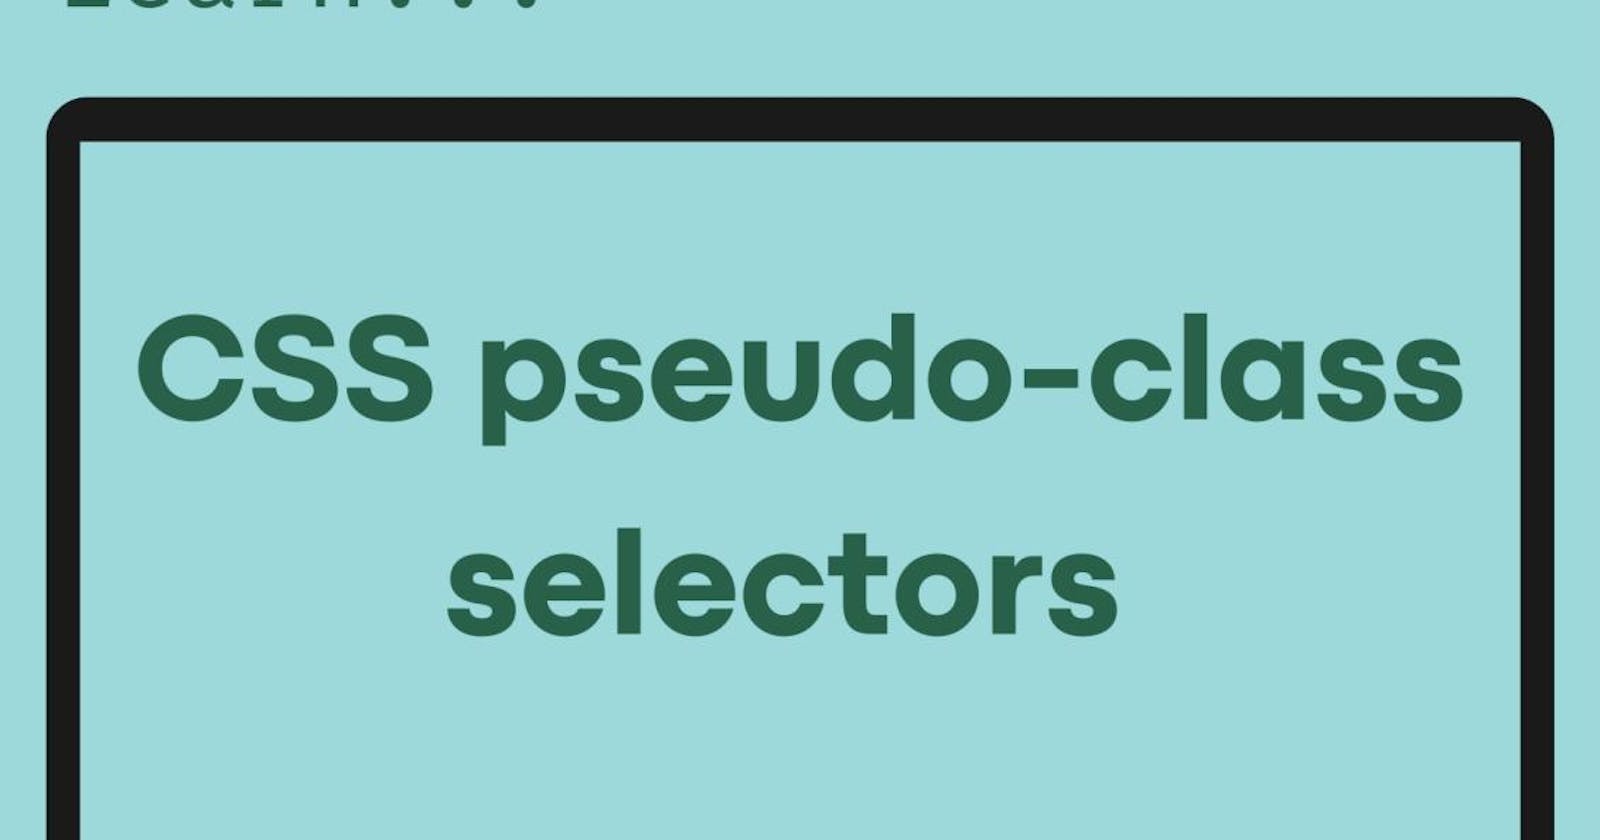 Some CSS pseudo class selectors